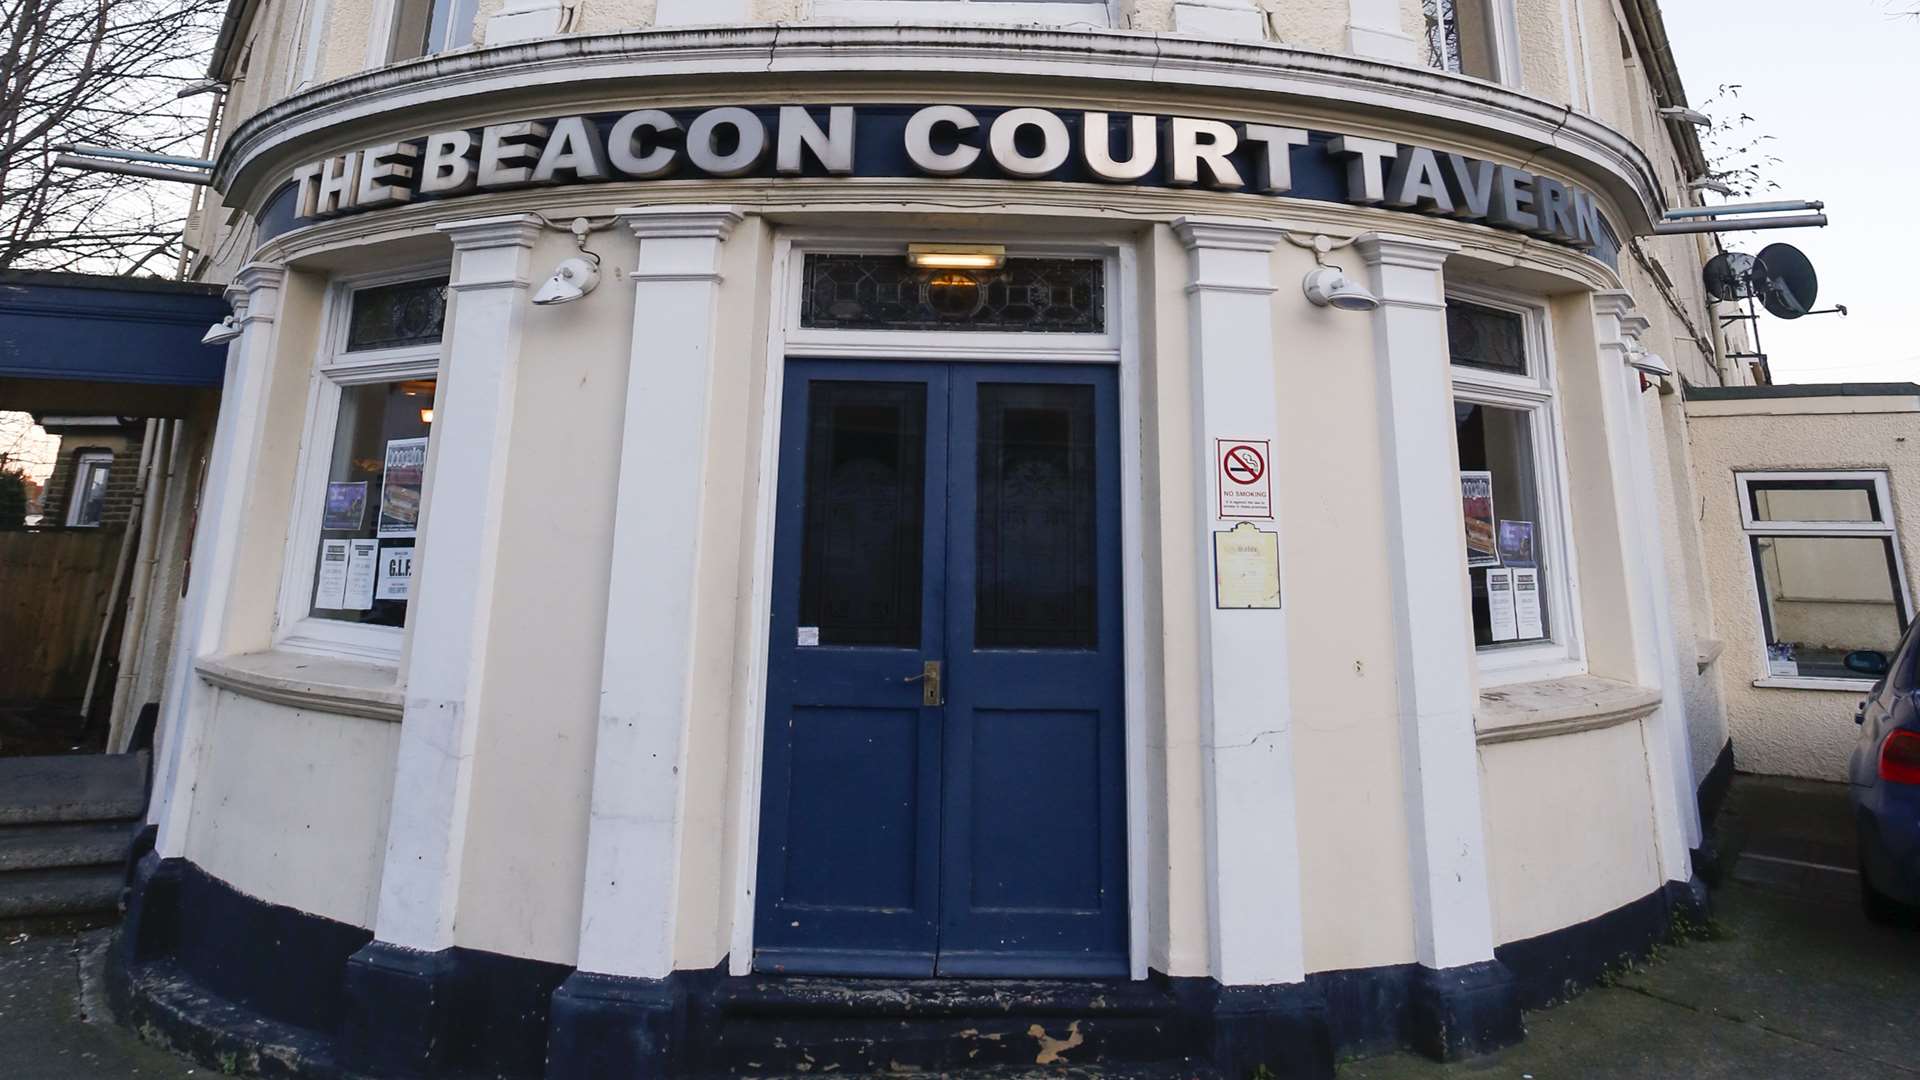 The Beacon Court Tavern, Gillingham